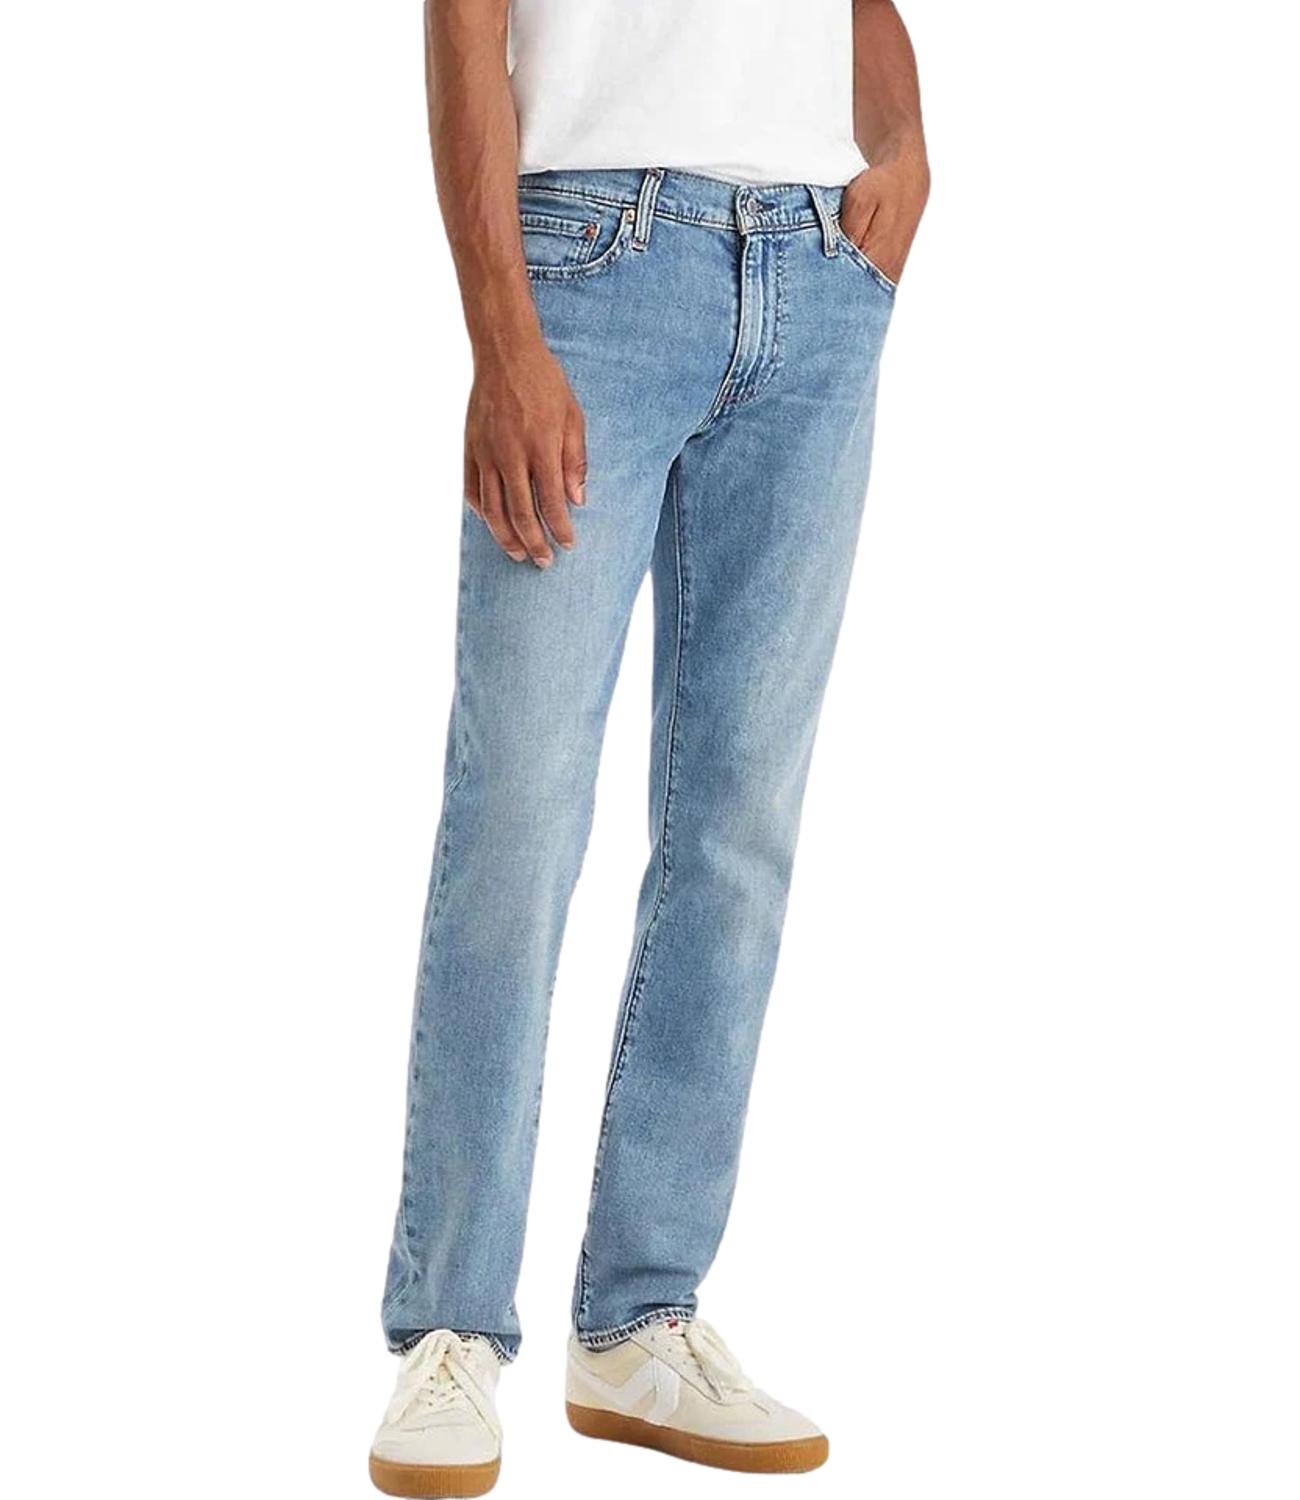 Levis 511 slim jeans uomo chiaro